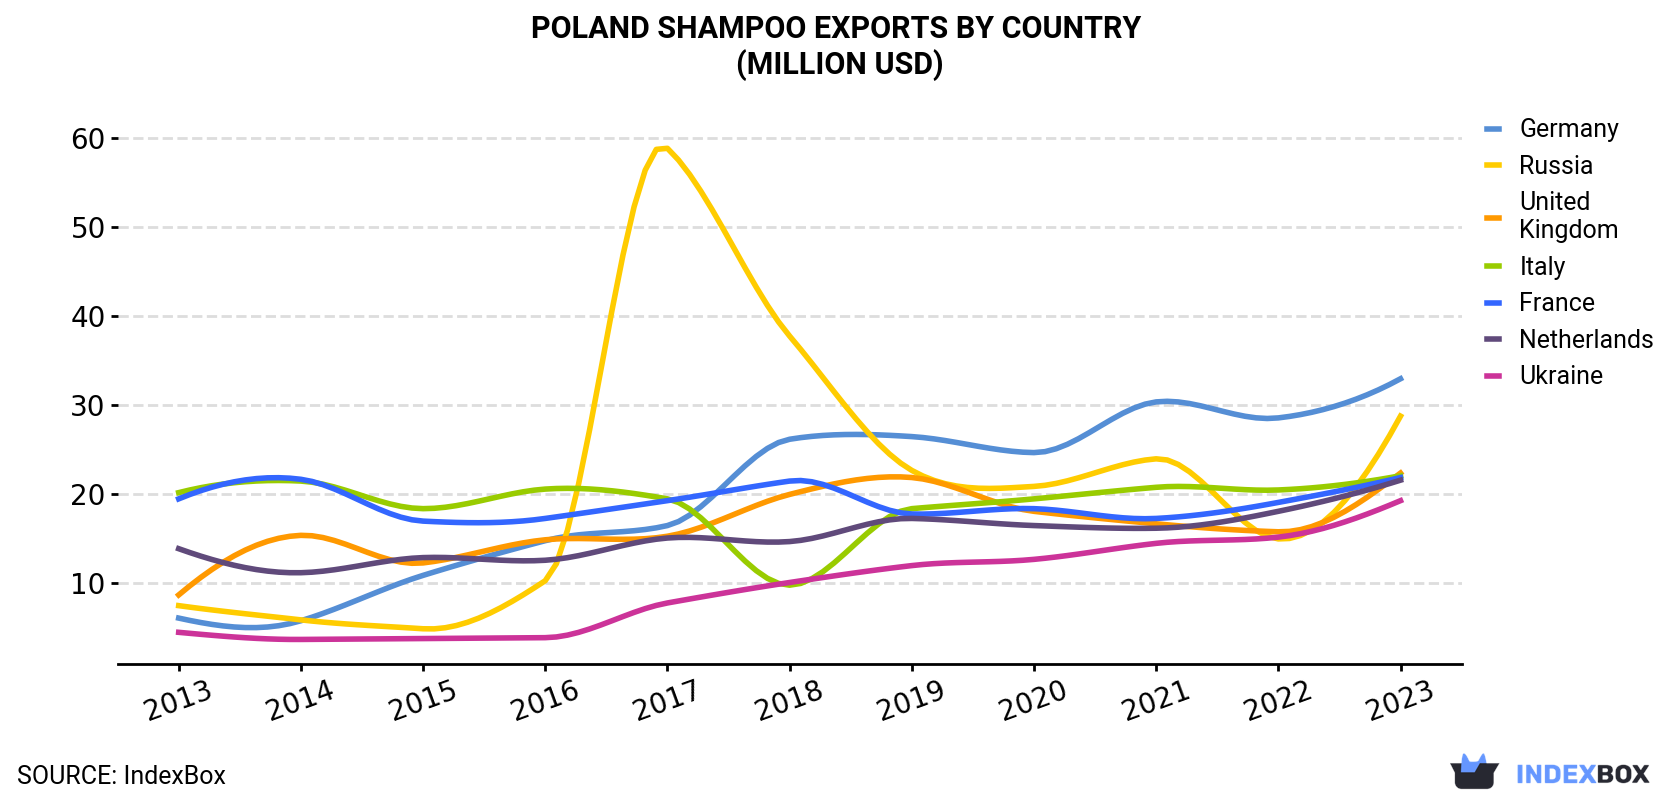 Poland Shampoo Exports By Country (Million USD)